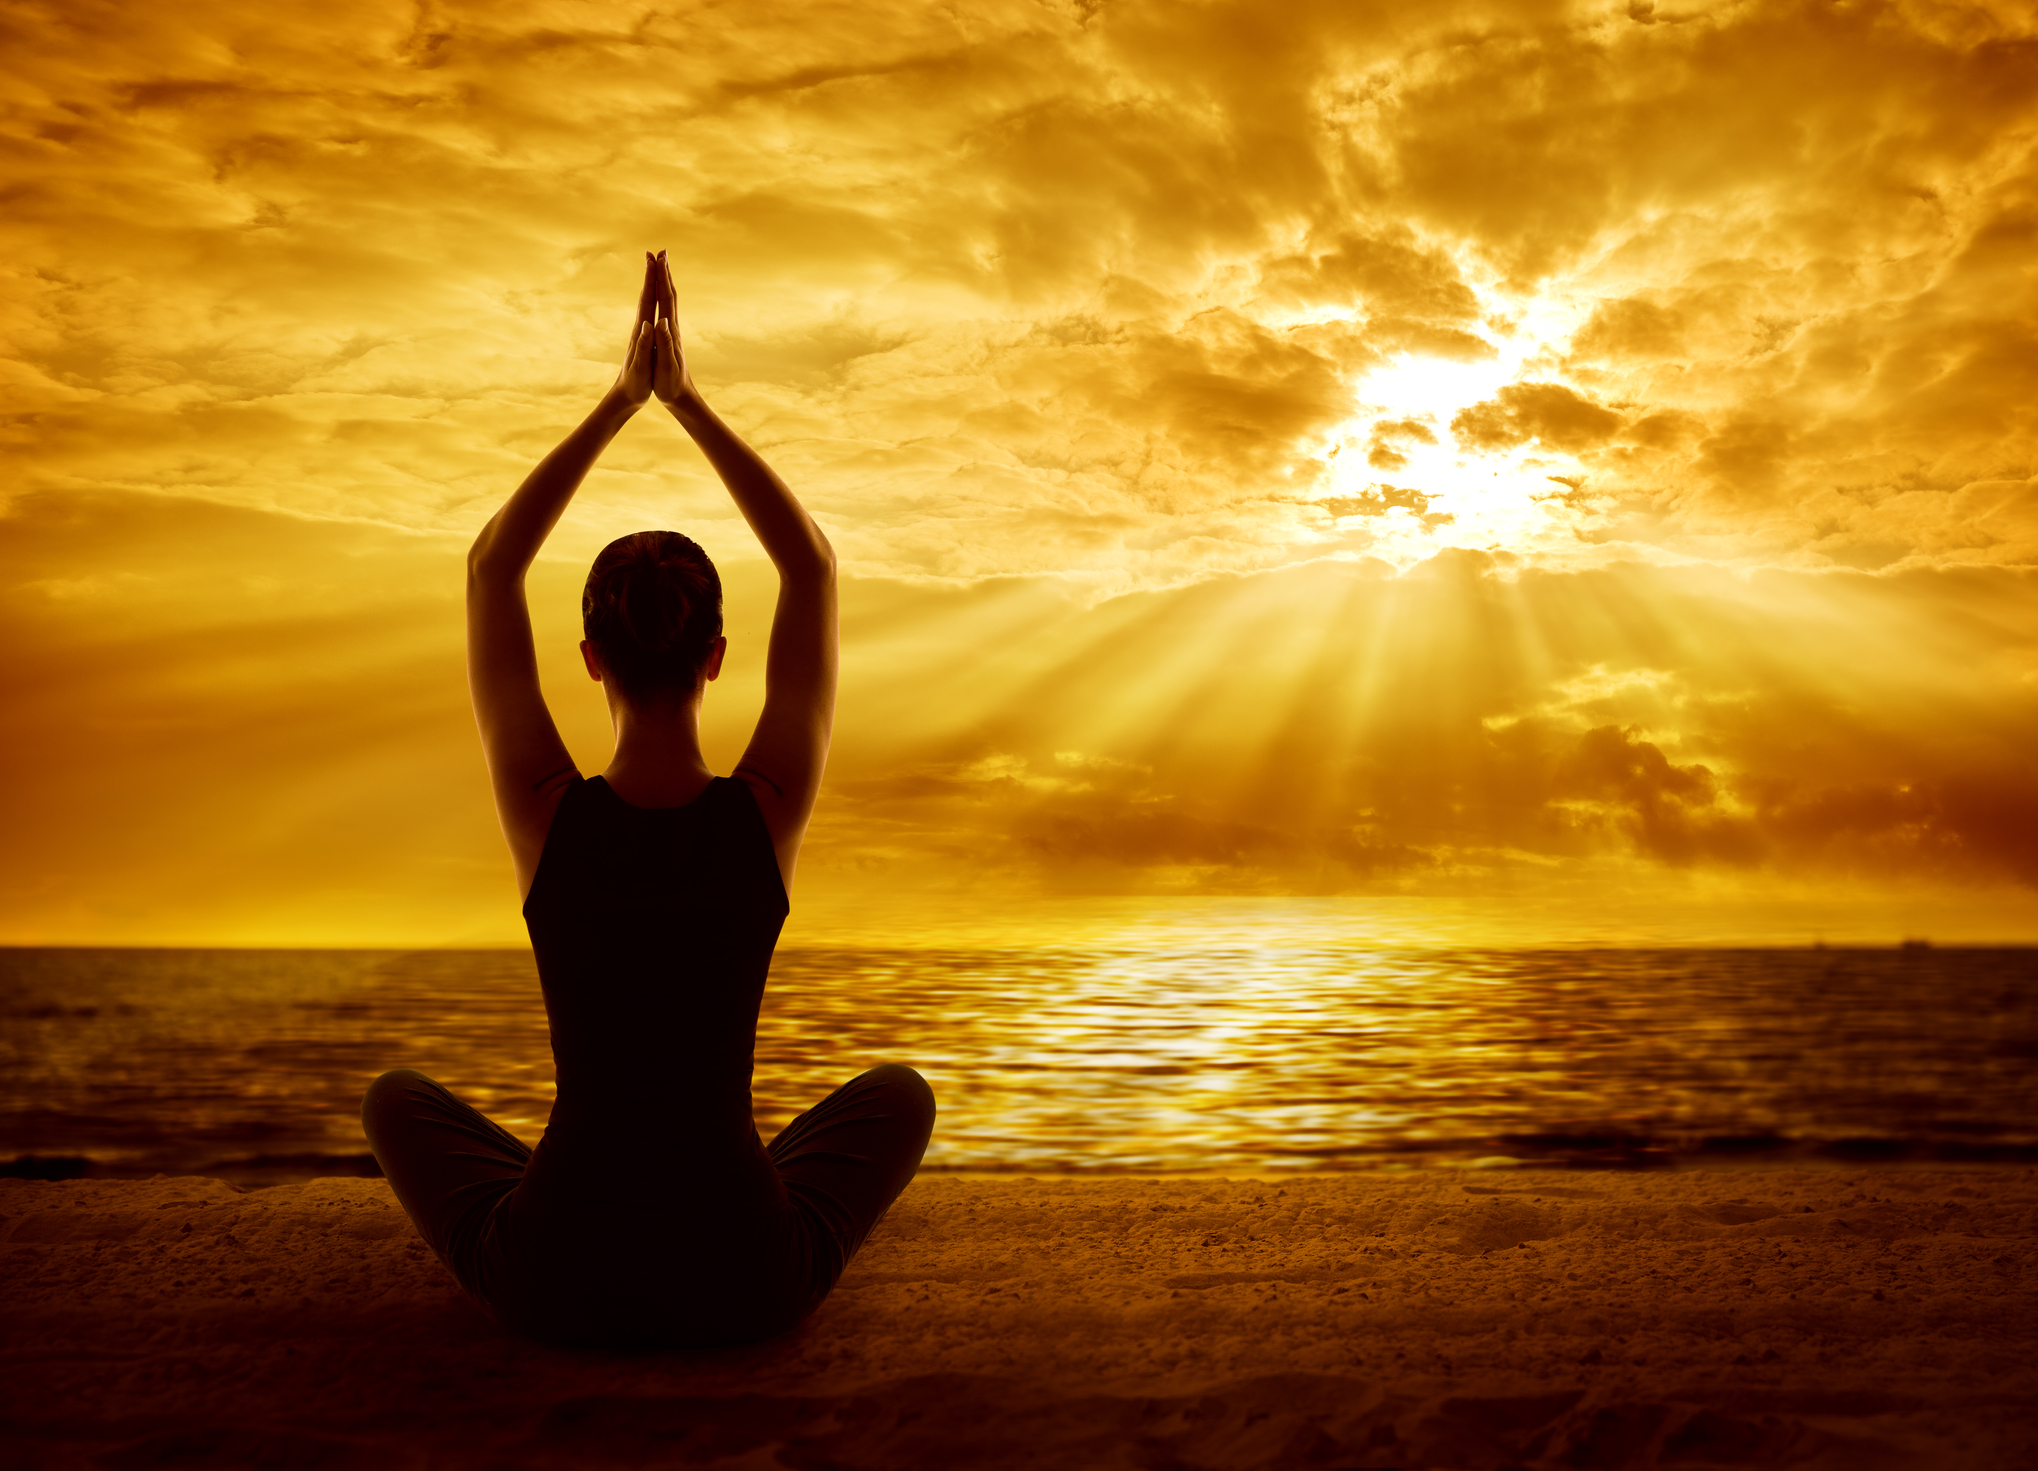 What is Shivanand yoga? - Quora